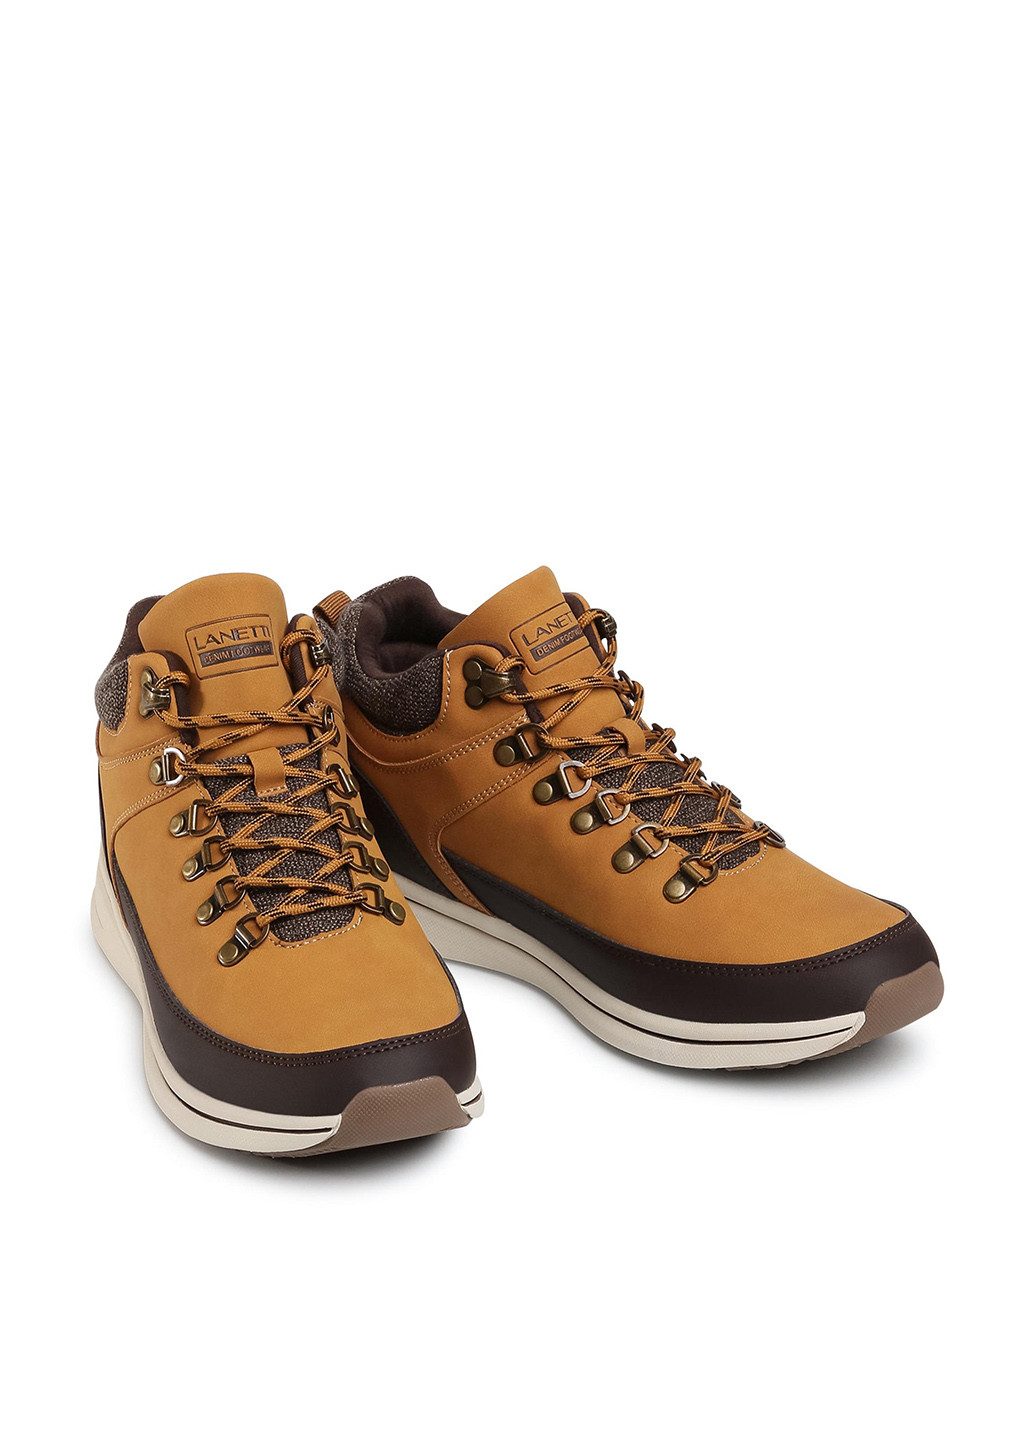 Коричневые осенние черевики mp07-91264-06 Lanetti